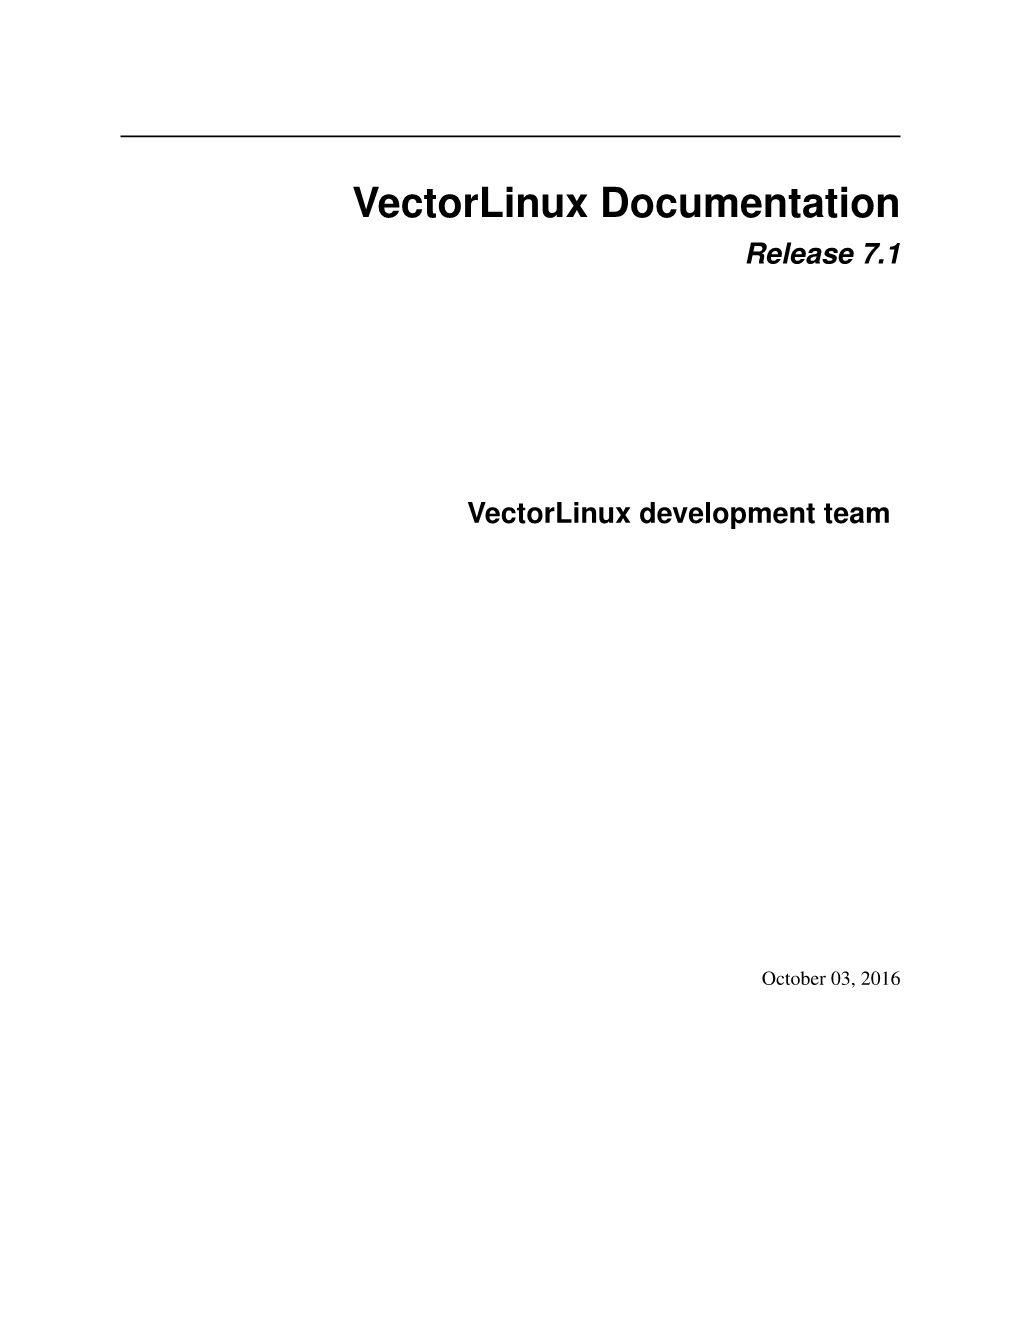 Vectorlinux Documentation Release 7.1